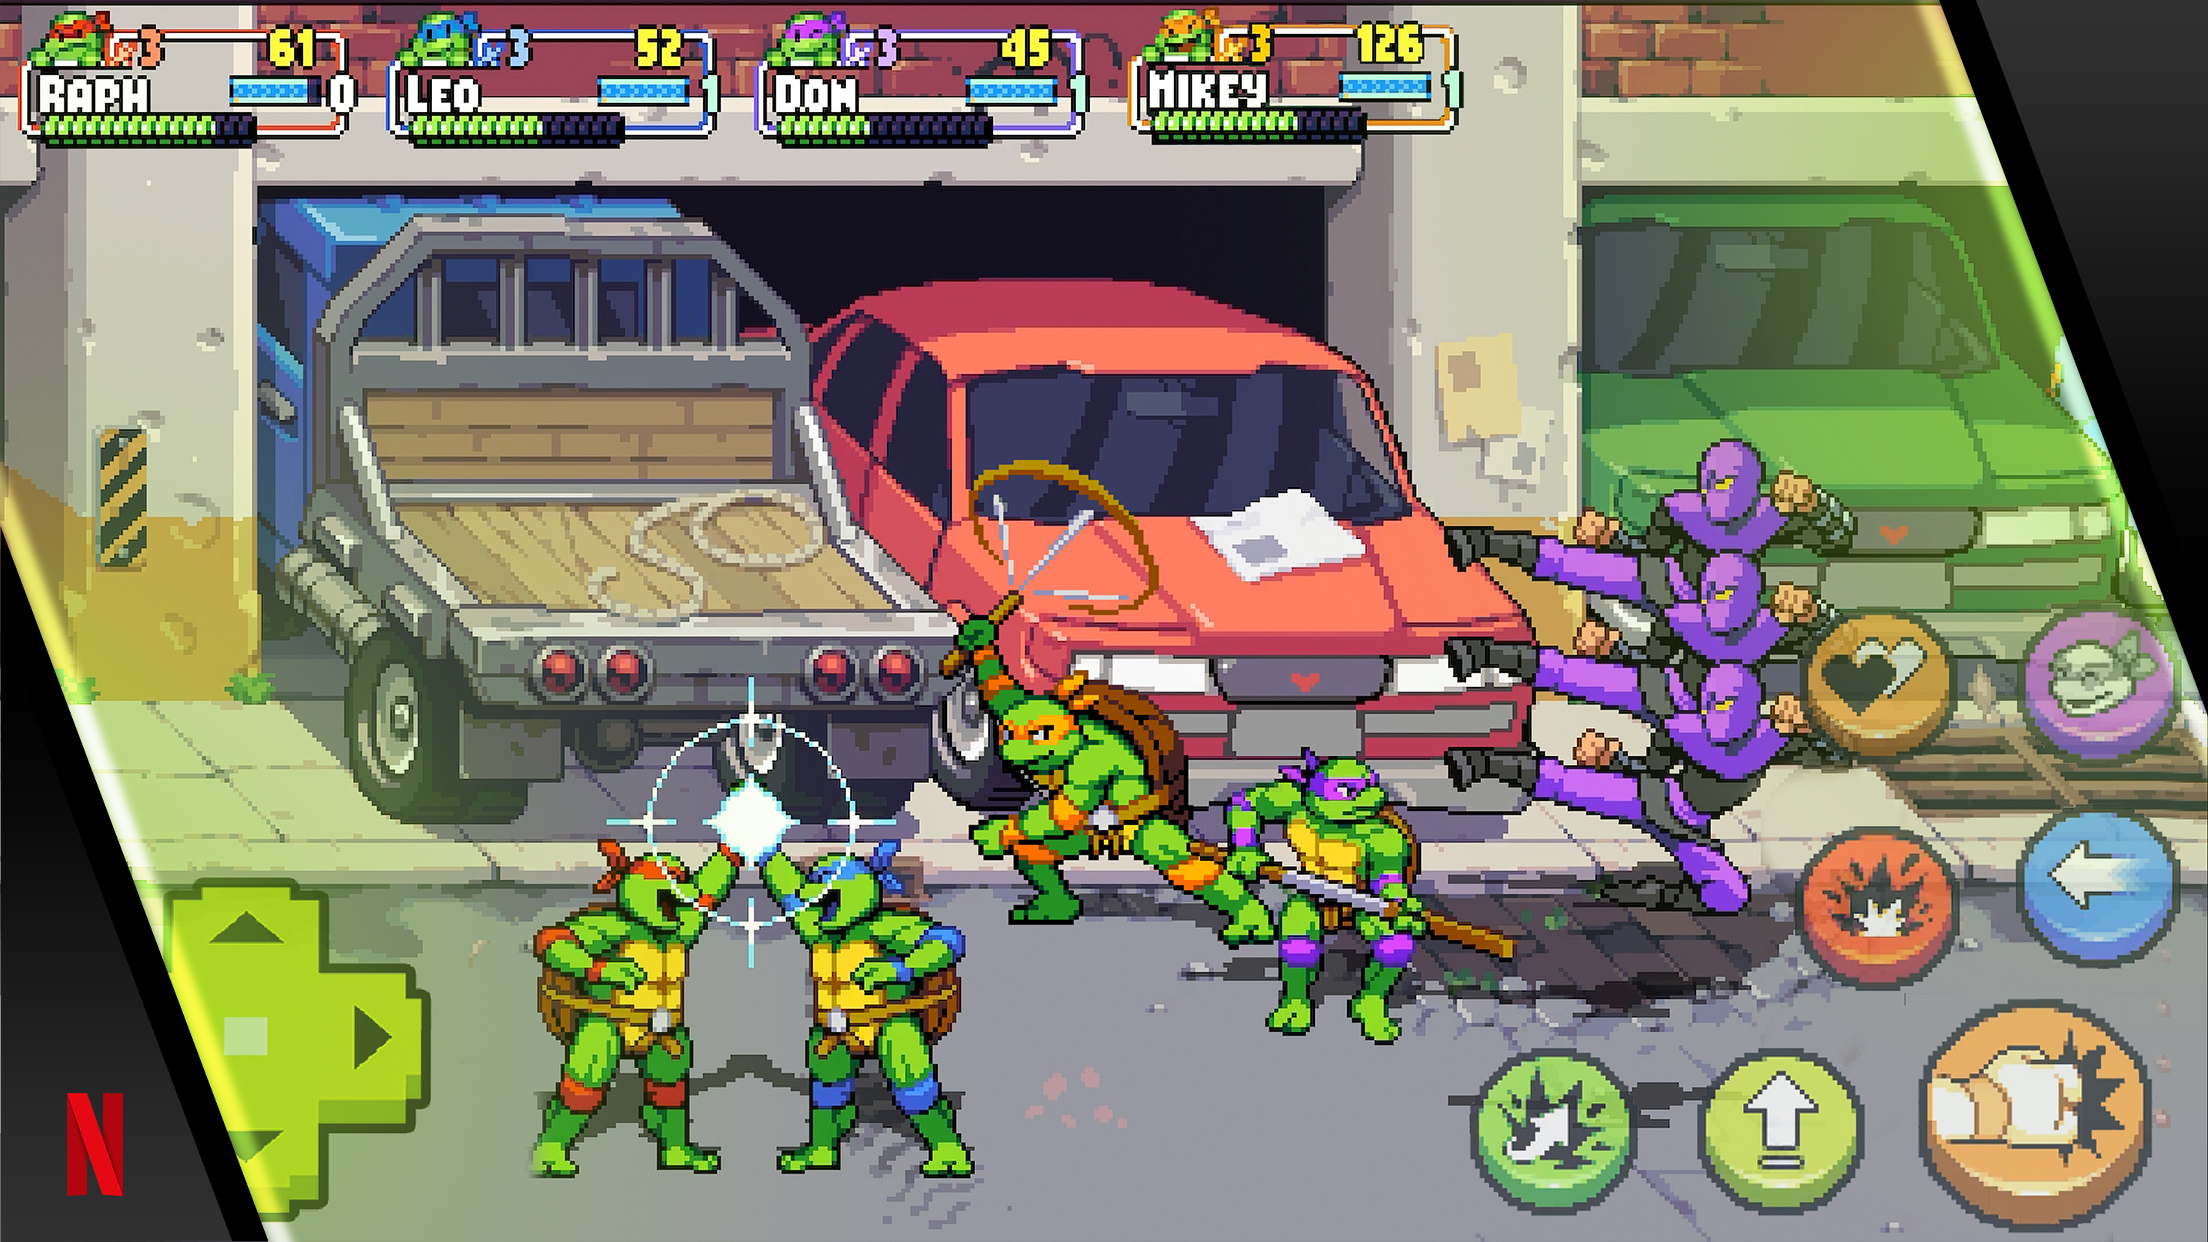 Las Tortugas chocan los cinco en Teenage Mutant Ninja Turtles: Shredder's Revenge para dispositivos móviles.